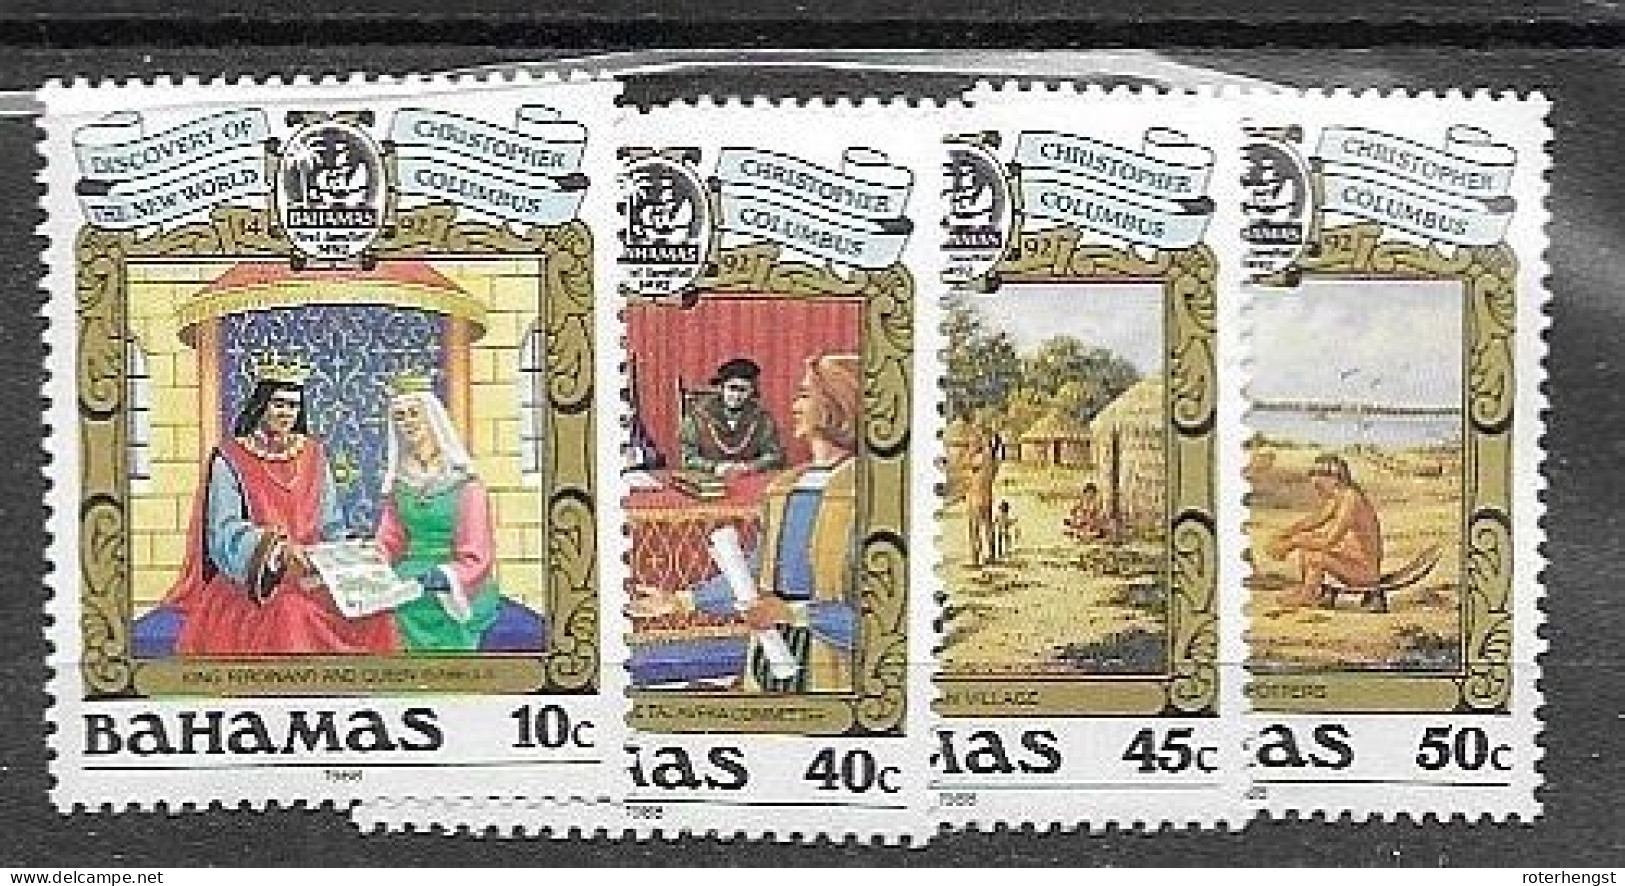 Bahamas Mnh ** 1988 9 Euros - 1859-1963 Crown Colony